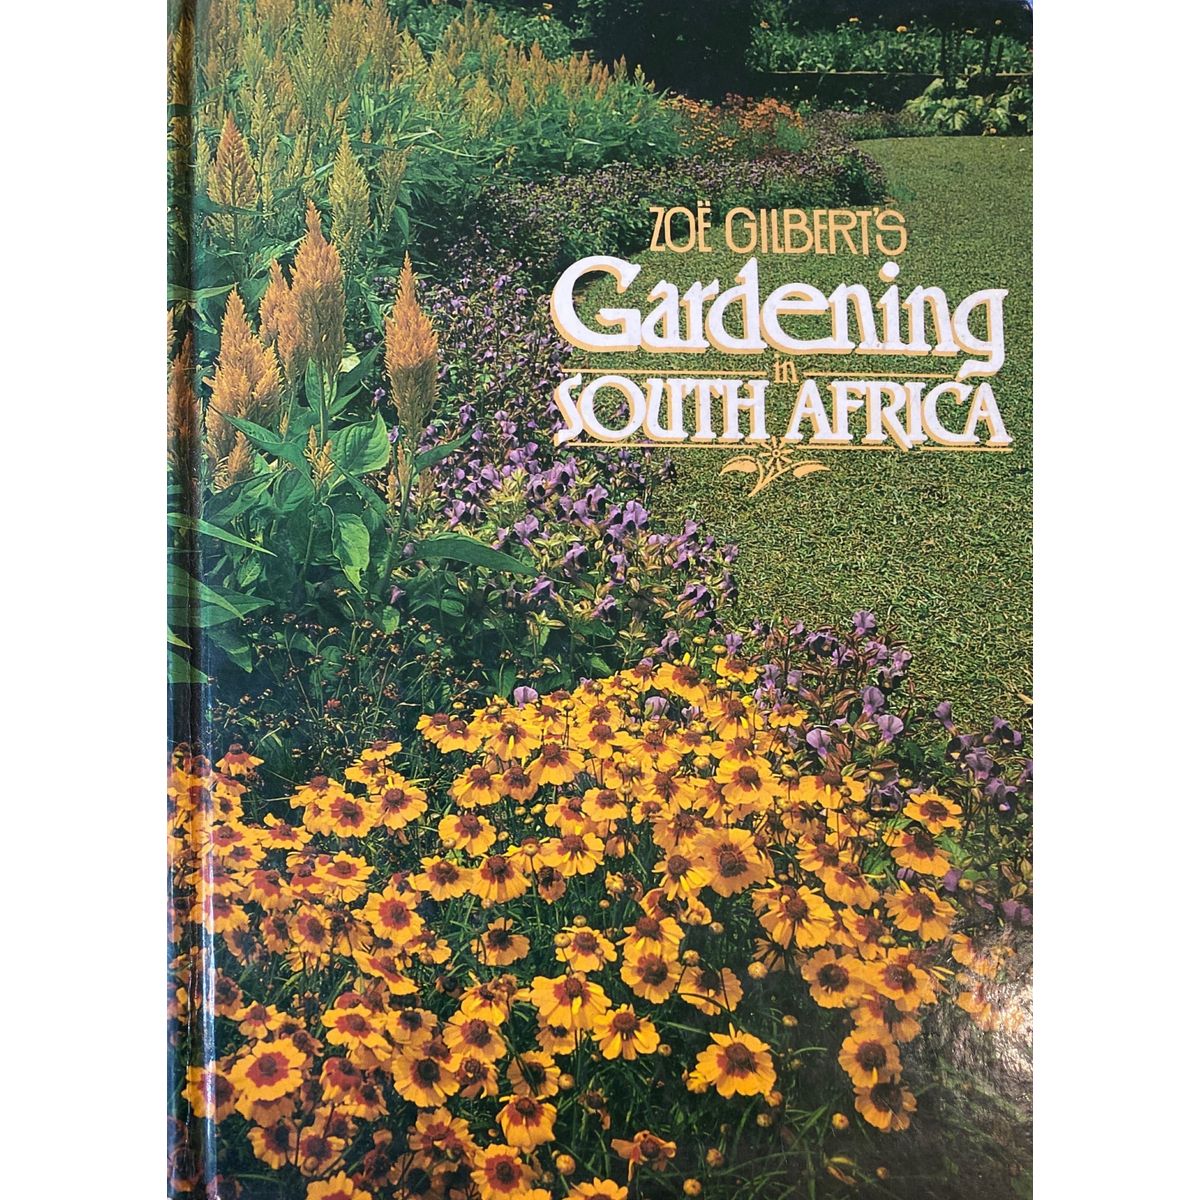 ISBN: 9780869771891 / 0869771892 - Gardening in South Africa by Zoe Gilbert [1983]